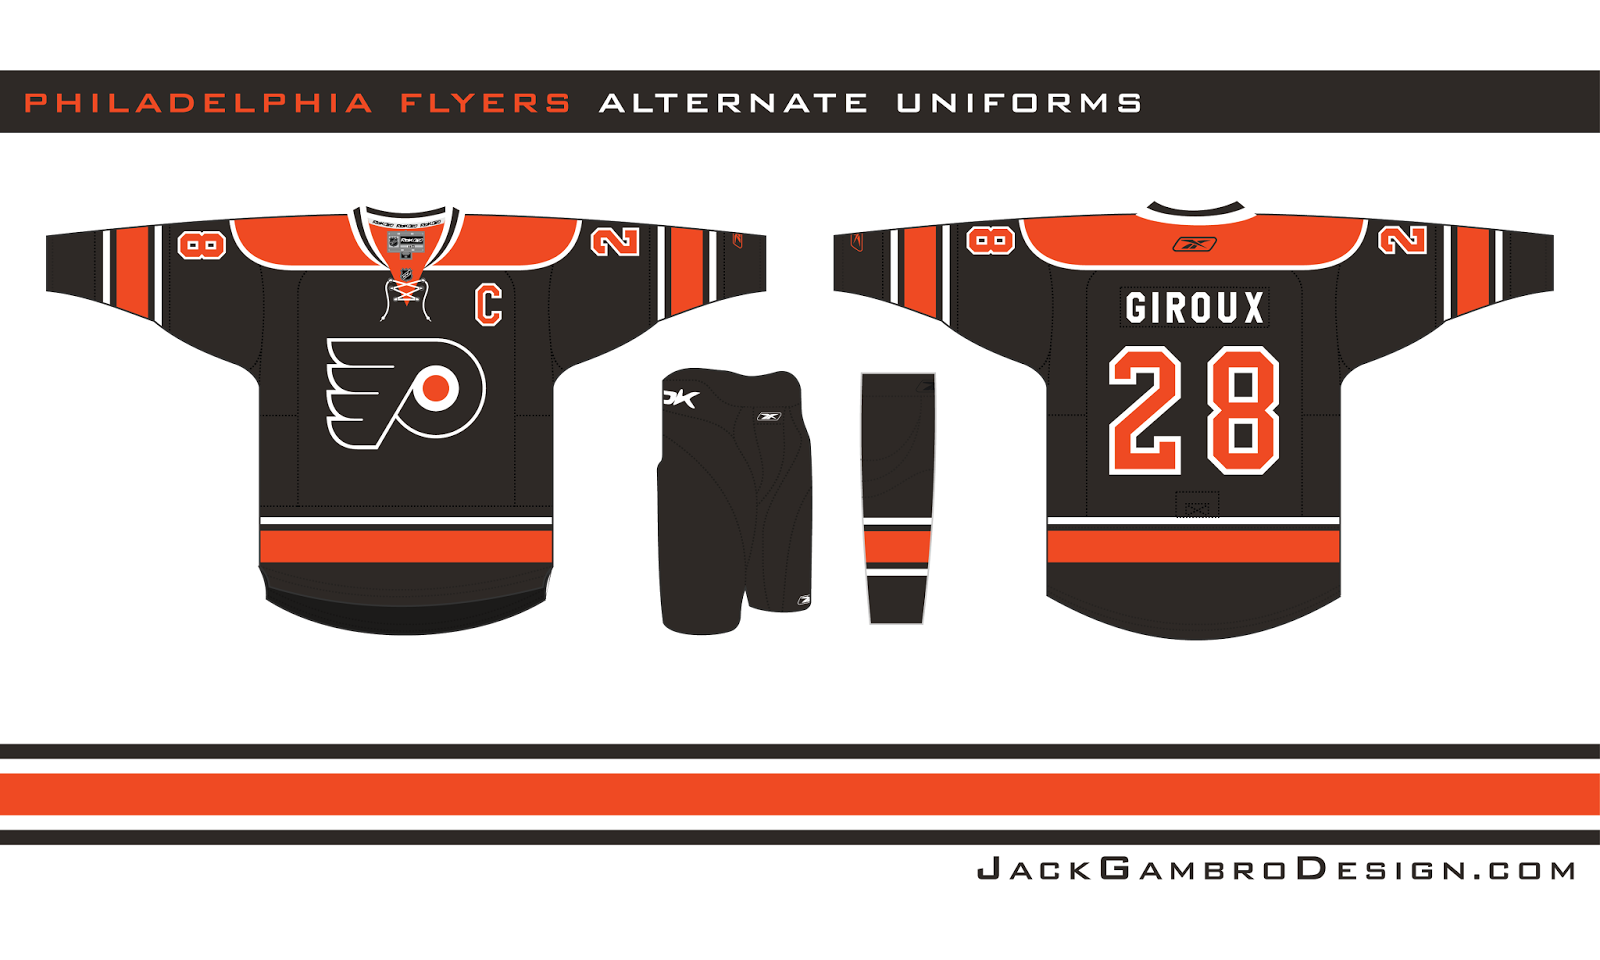 Flyers+alternate+uniforms-01.png